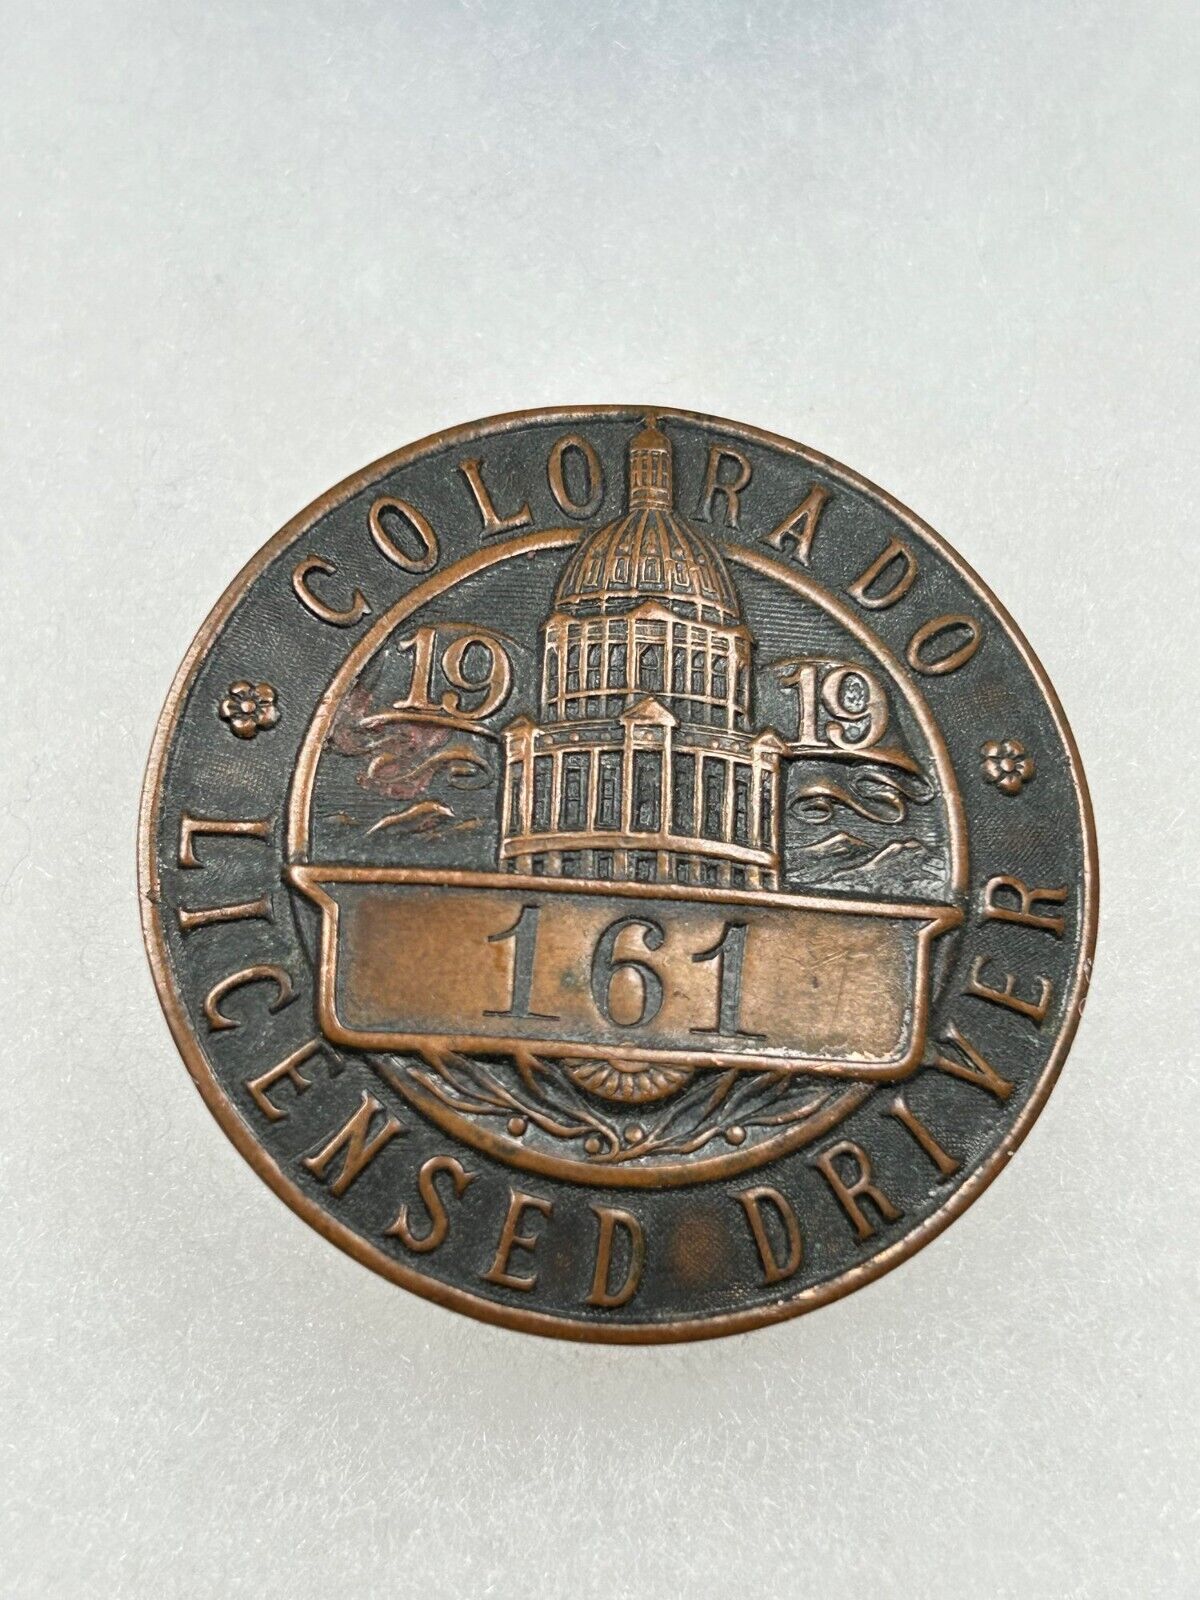 1919 Colorado Chauffeur Badge #161